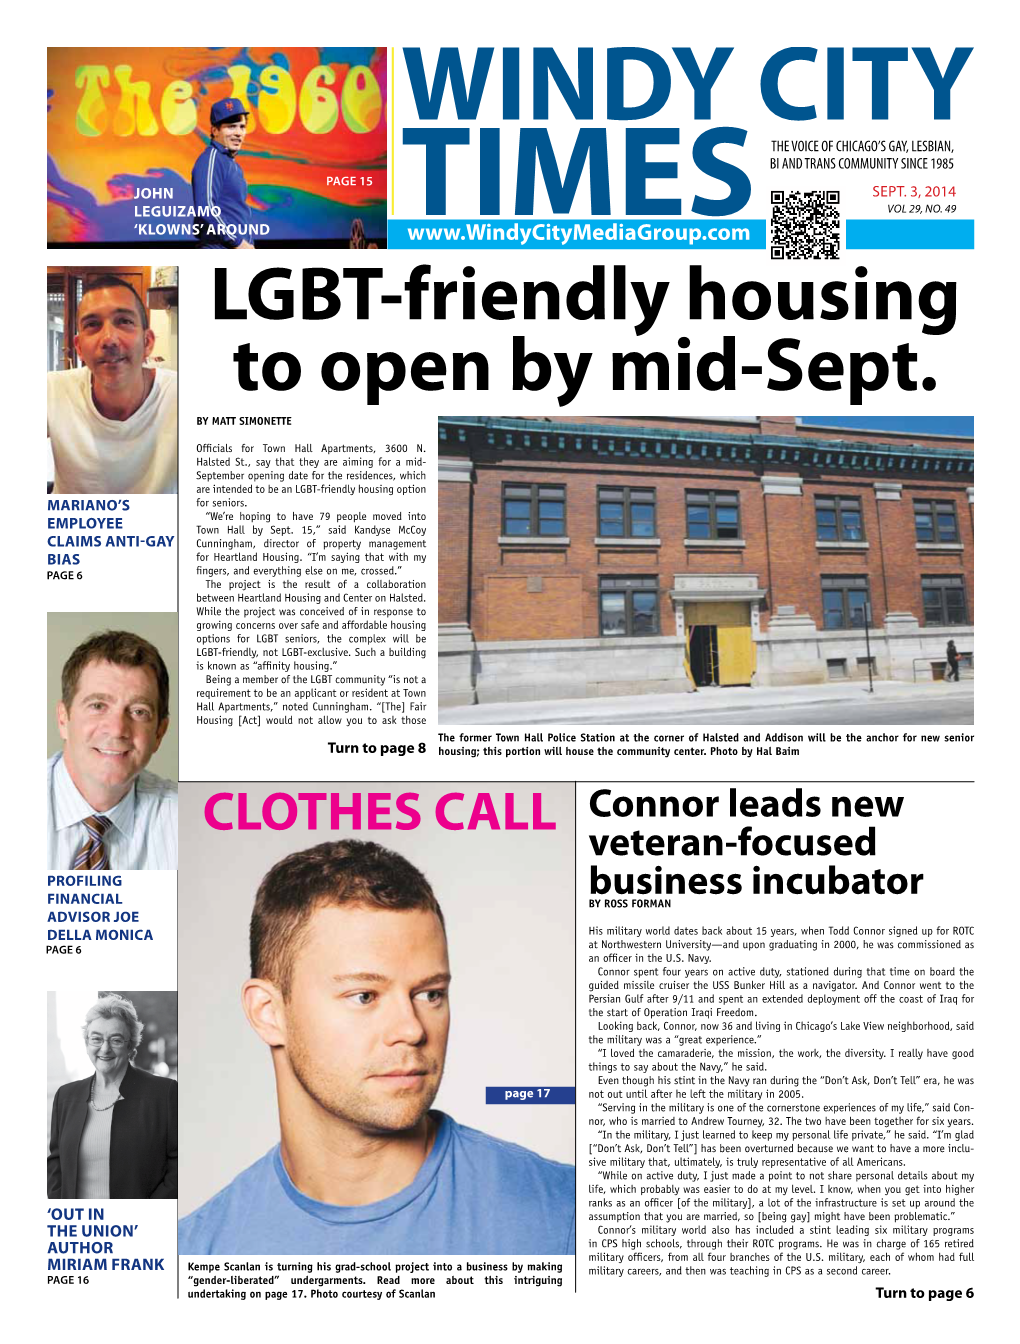 LGBT-Friendly Housing to Open by Mid-Sept. by Matt Simonette